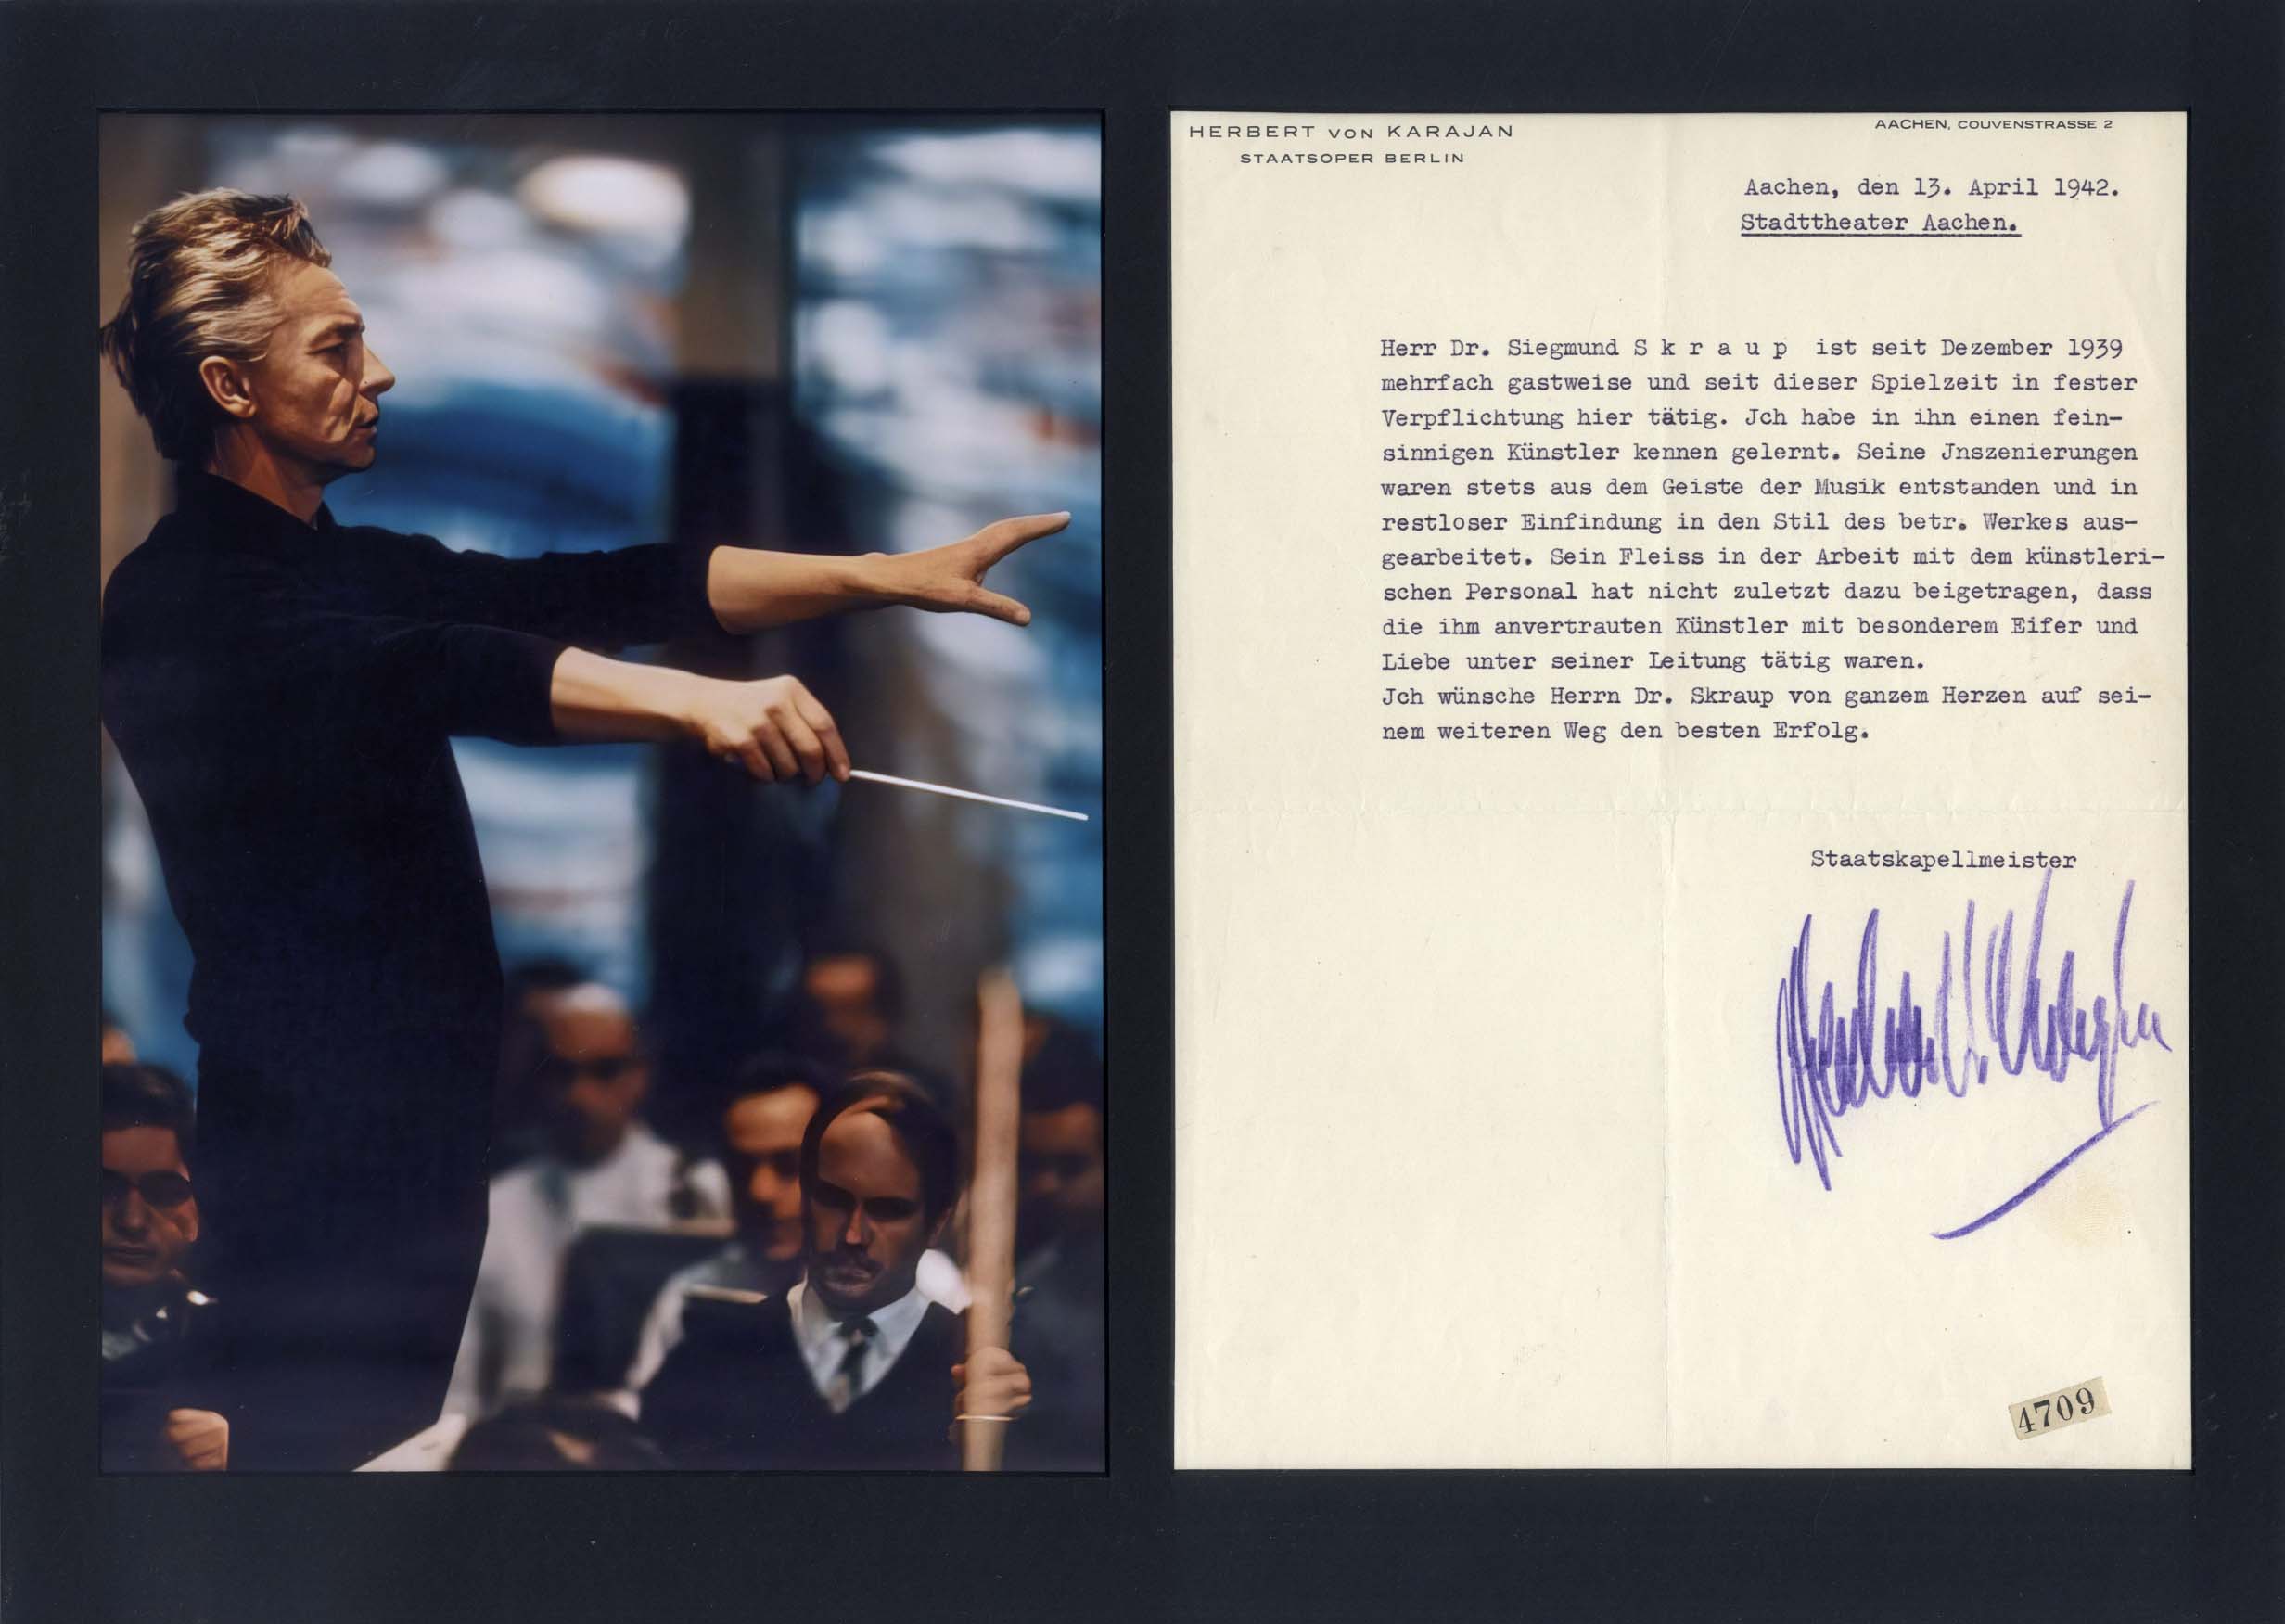 Herbert von Karajan Autograph